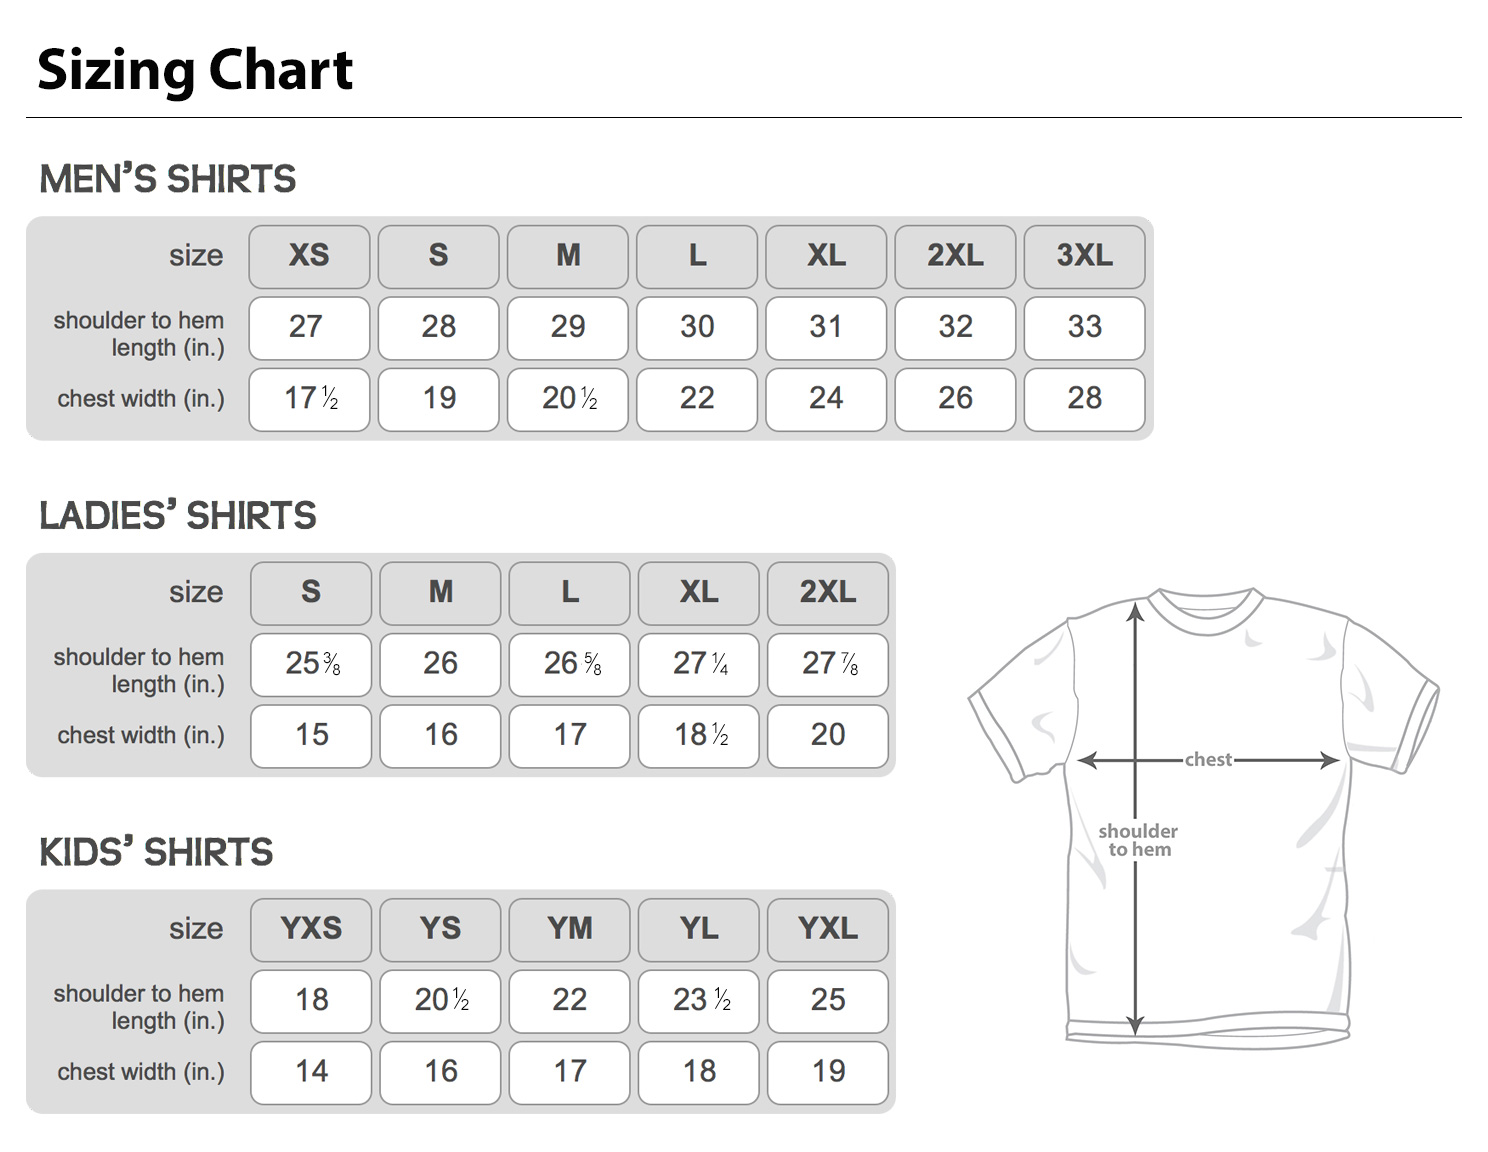 International Shirt Size Chart